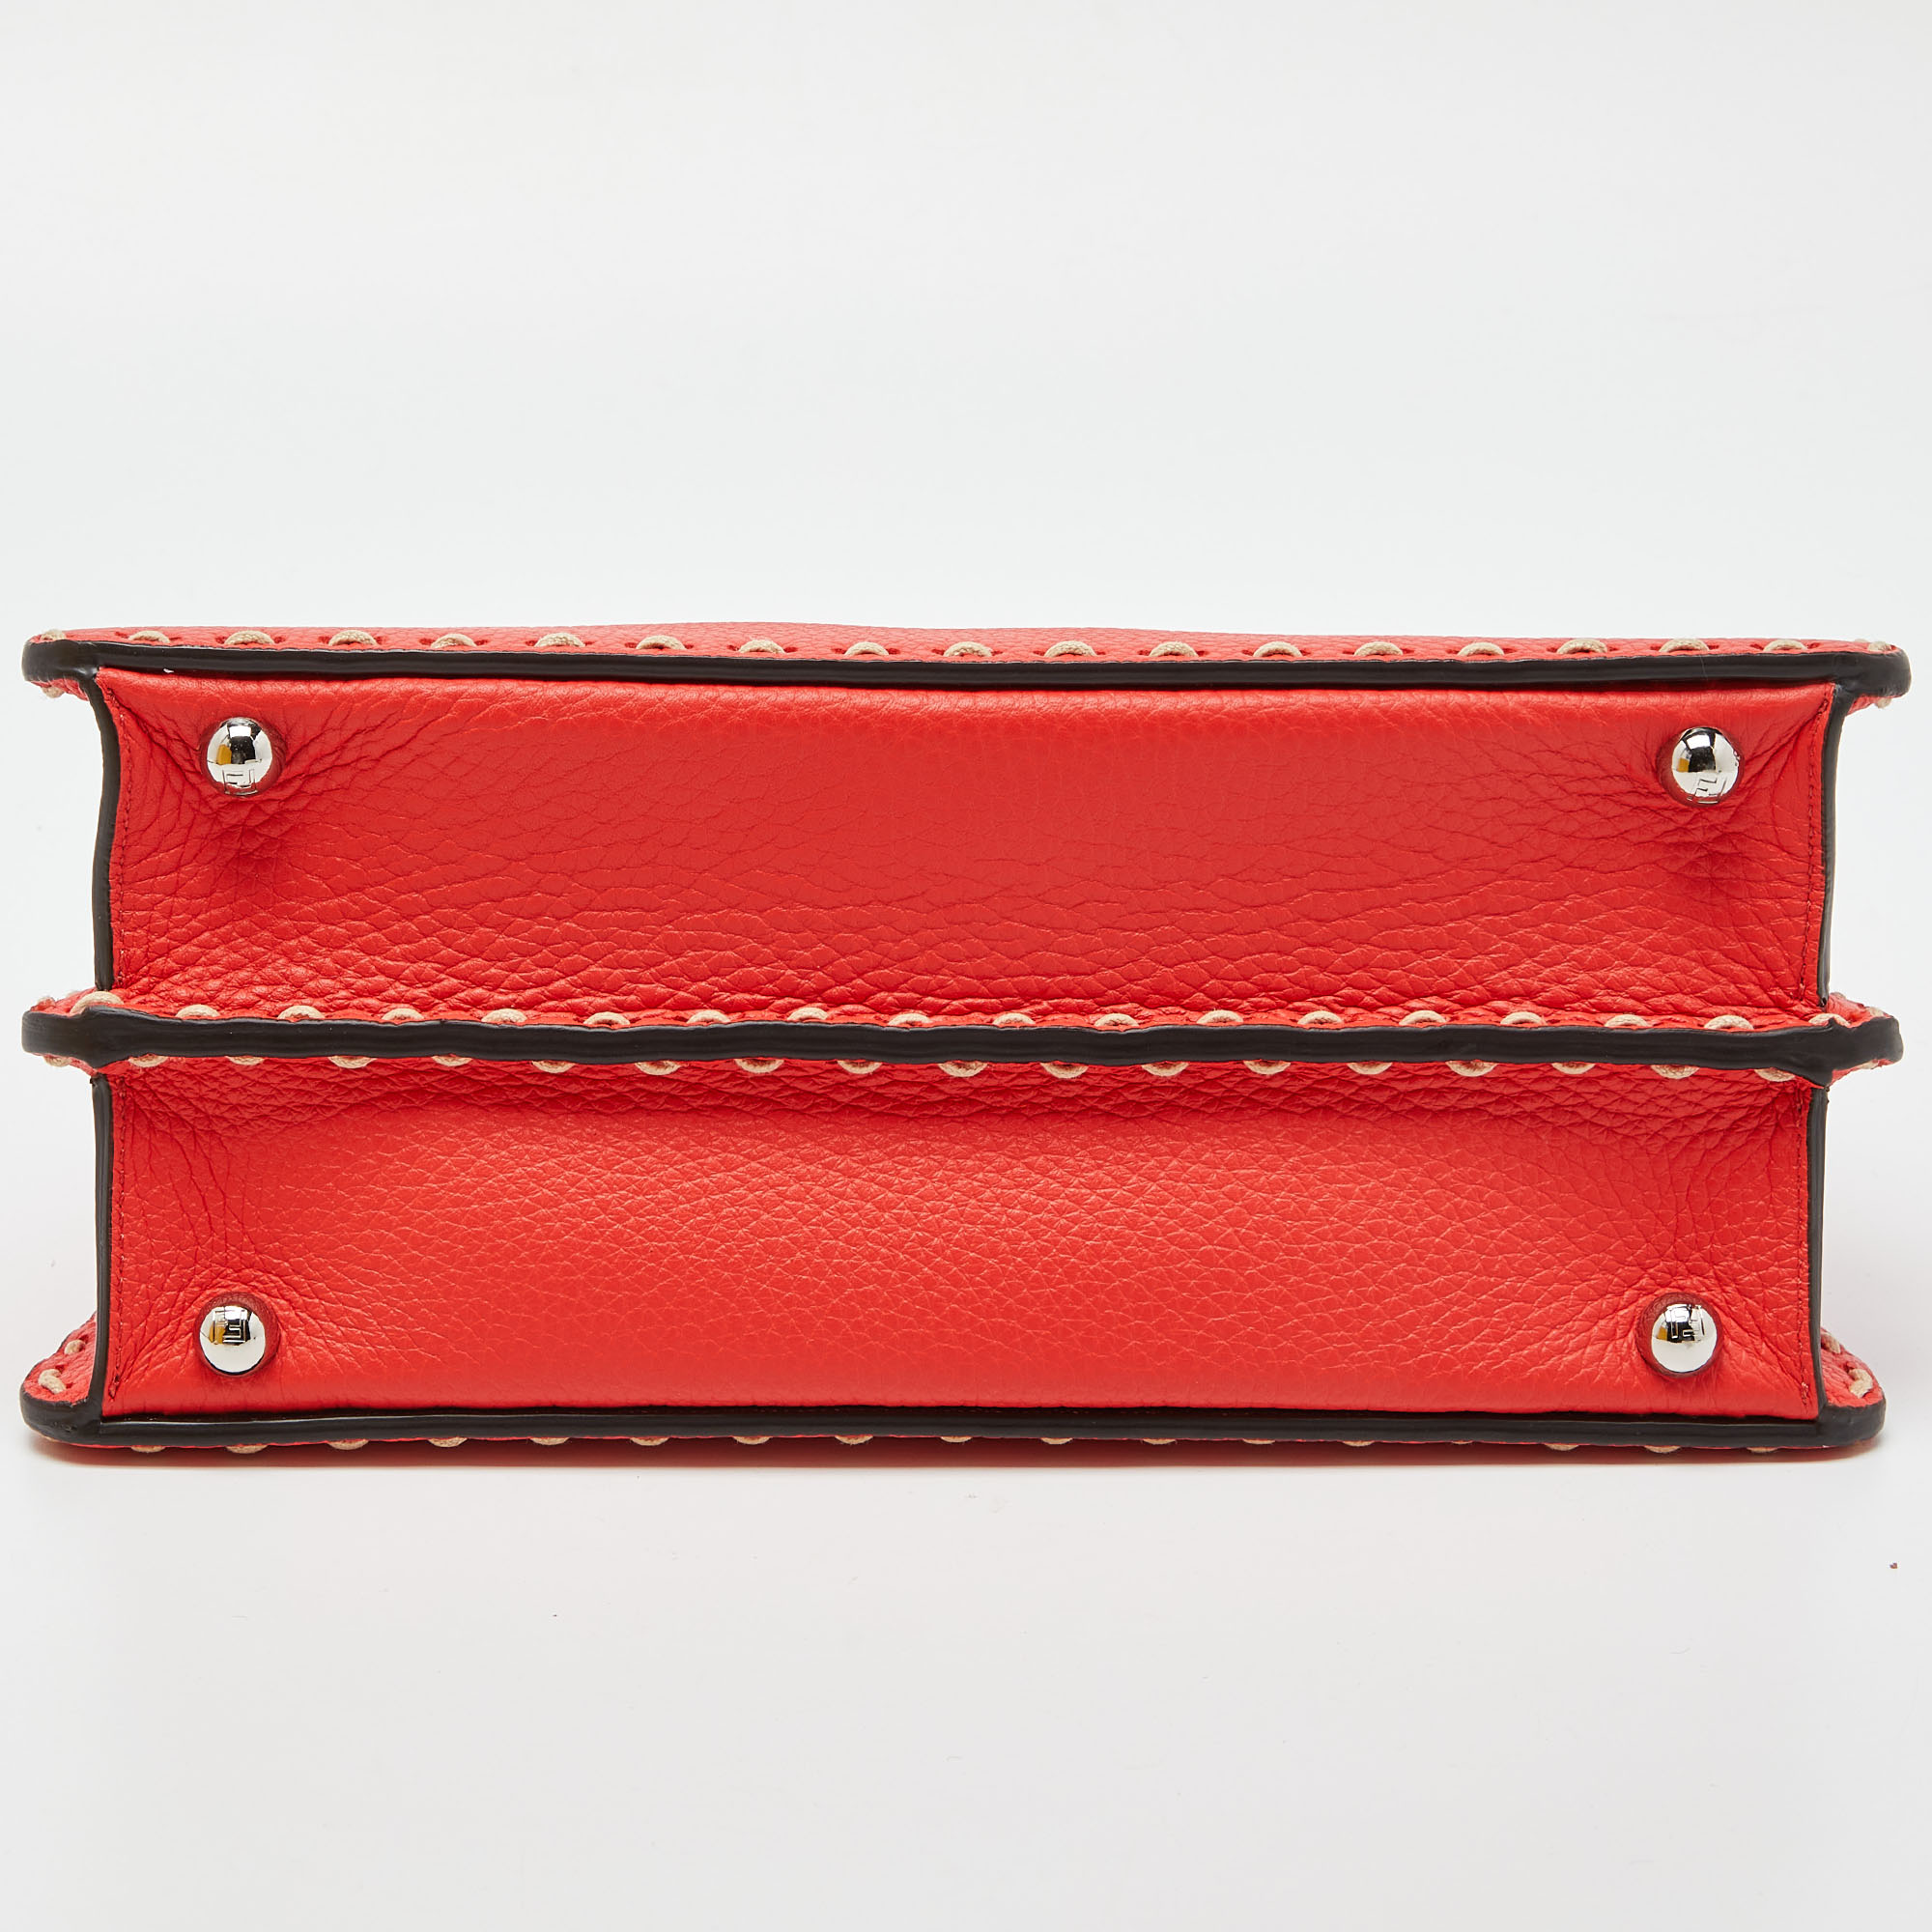 Fendi Red Selleria Leather Small Peekaboo ISeeU Top Handle Bag